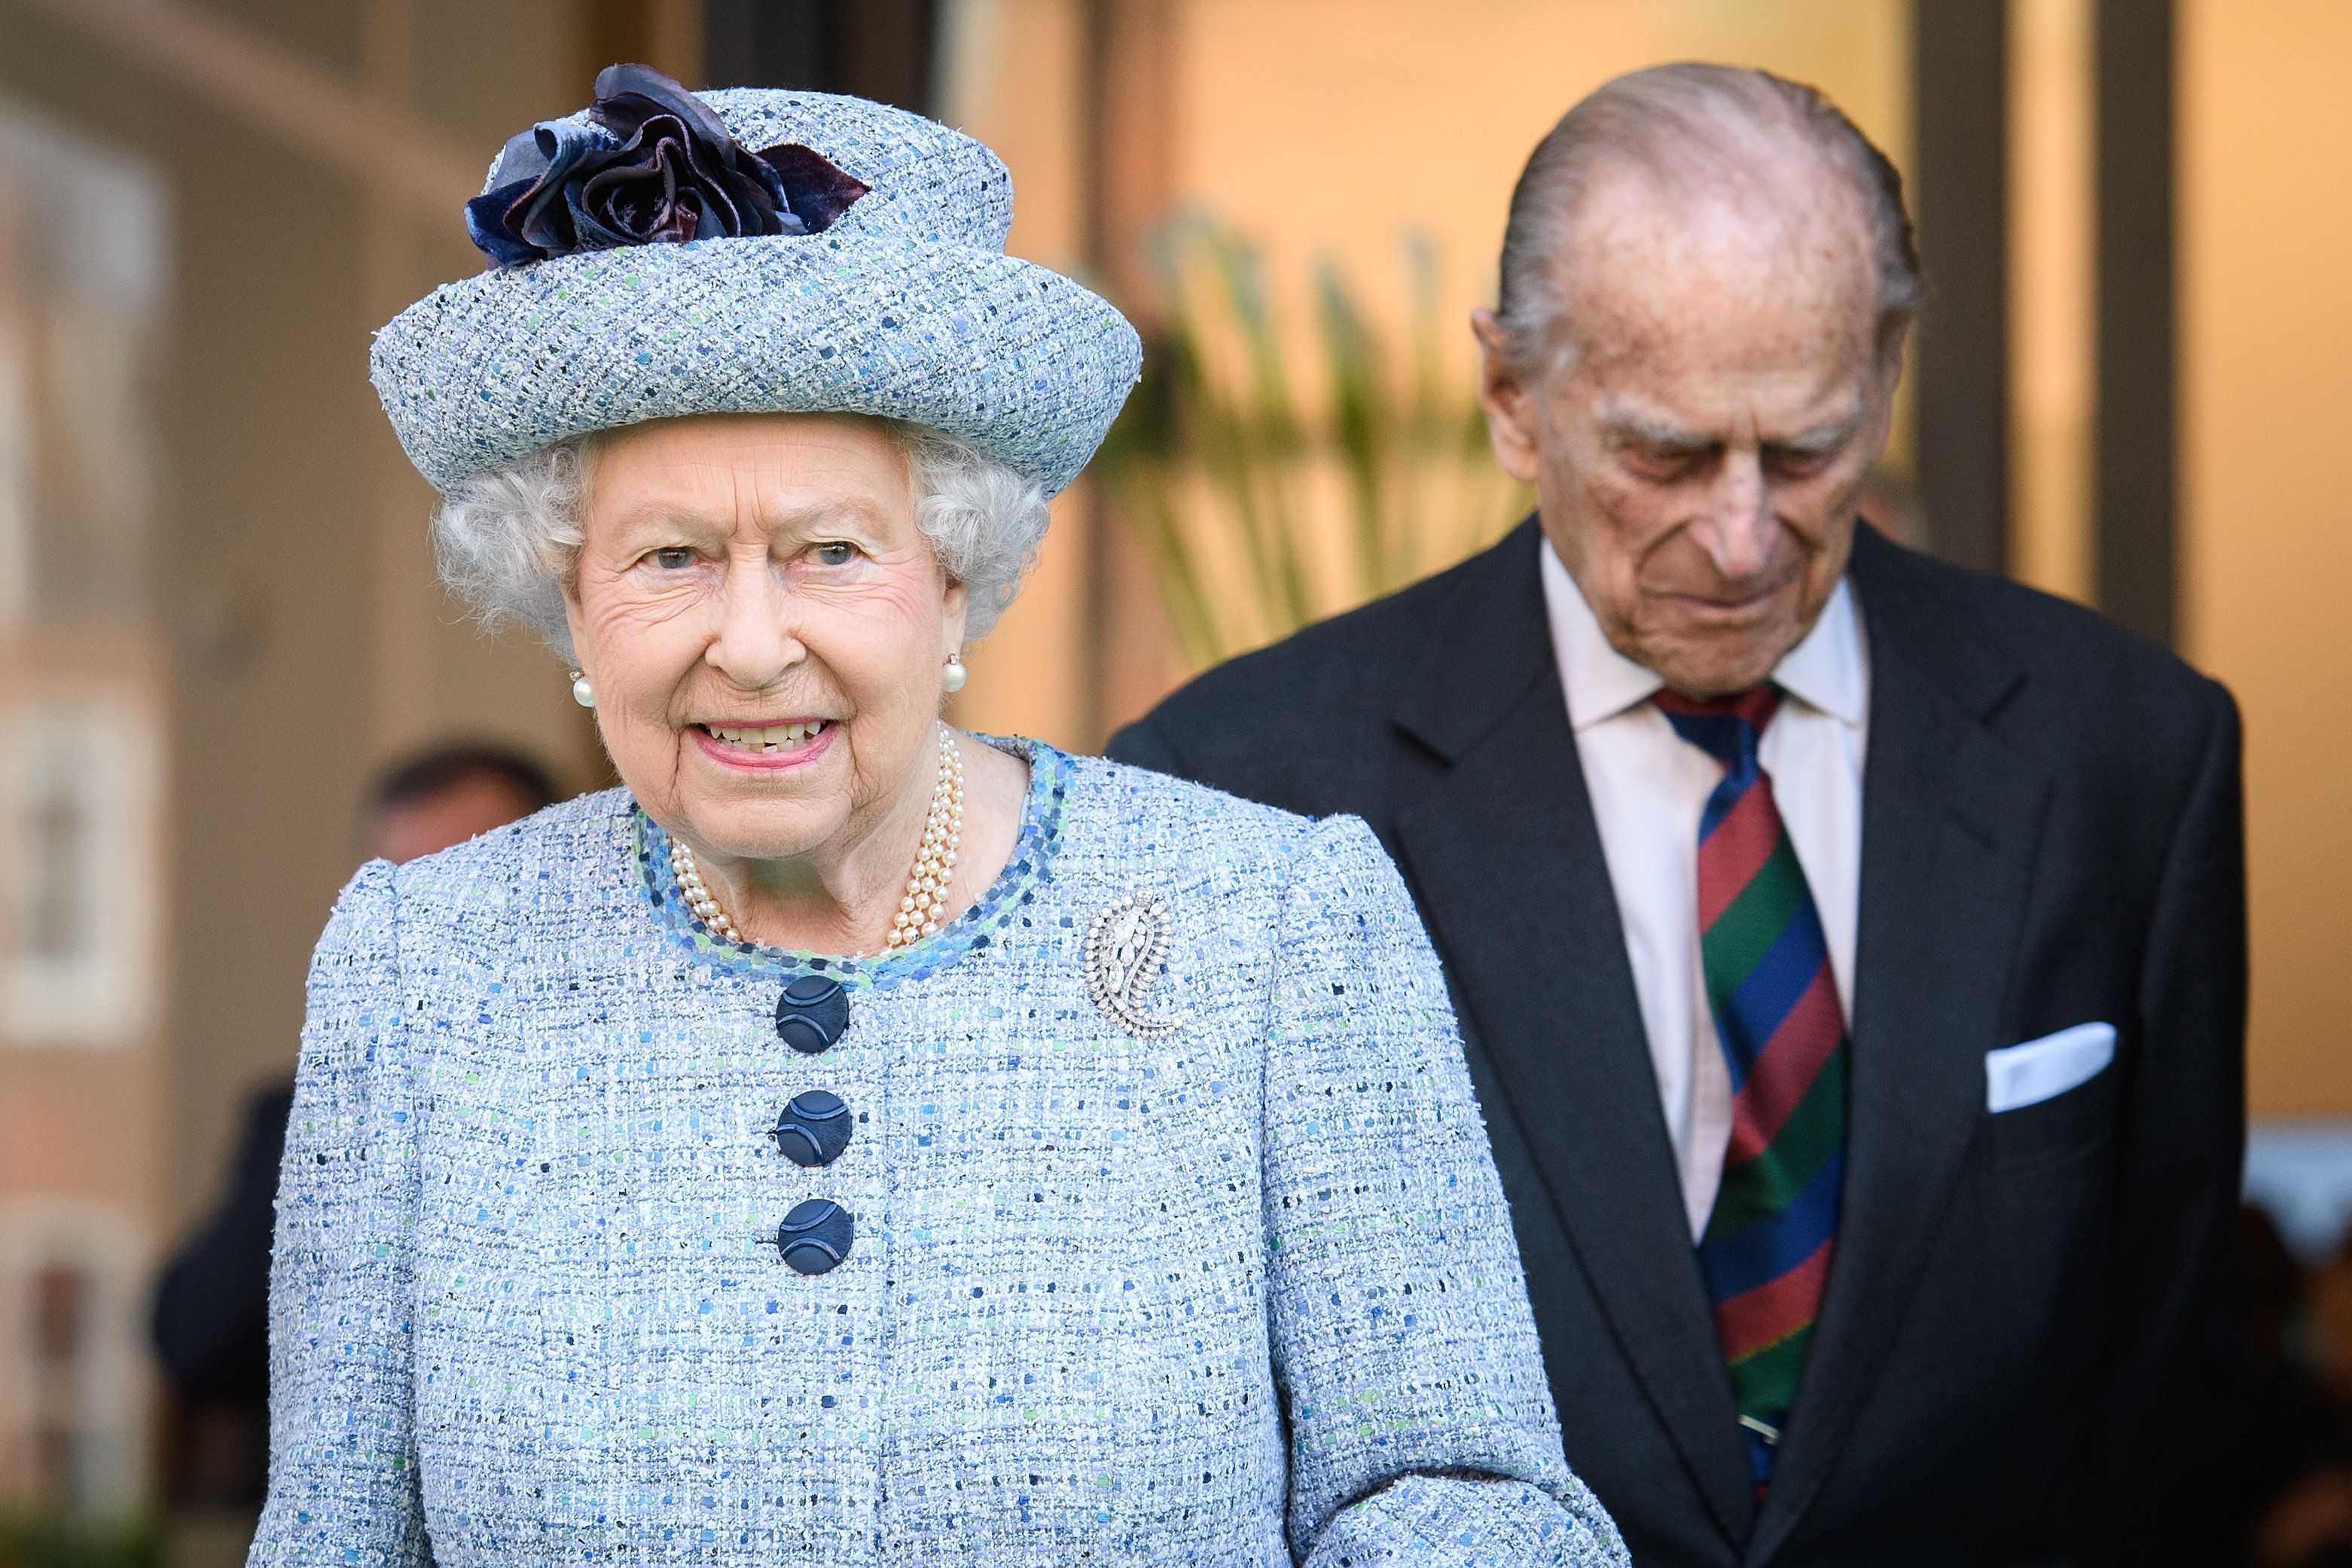 Queen elizabeth dies at 96, ending an era for britain